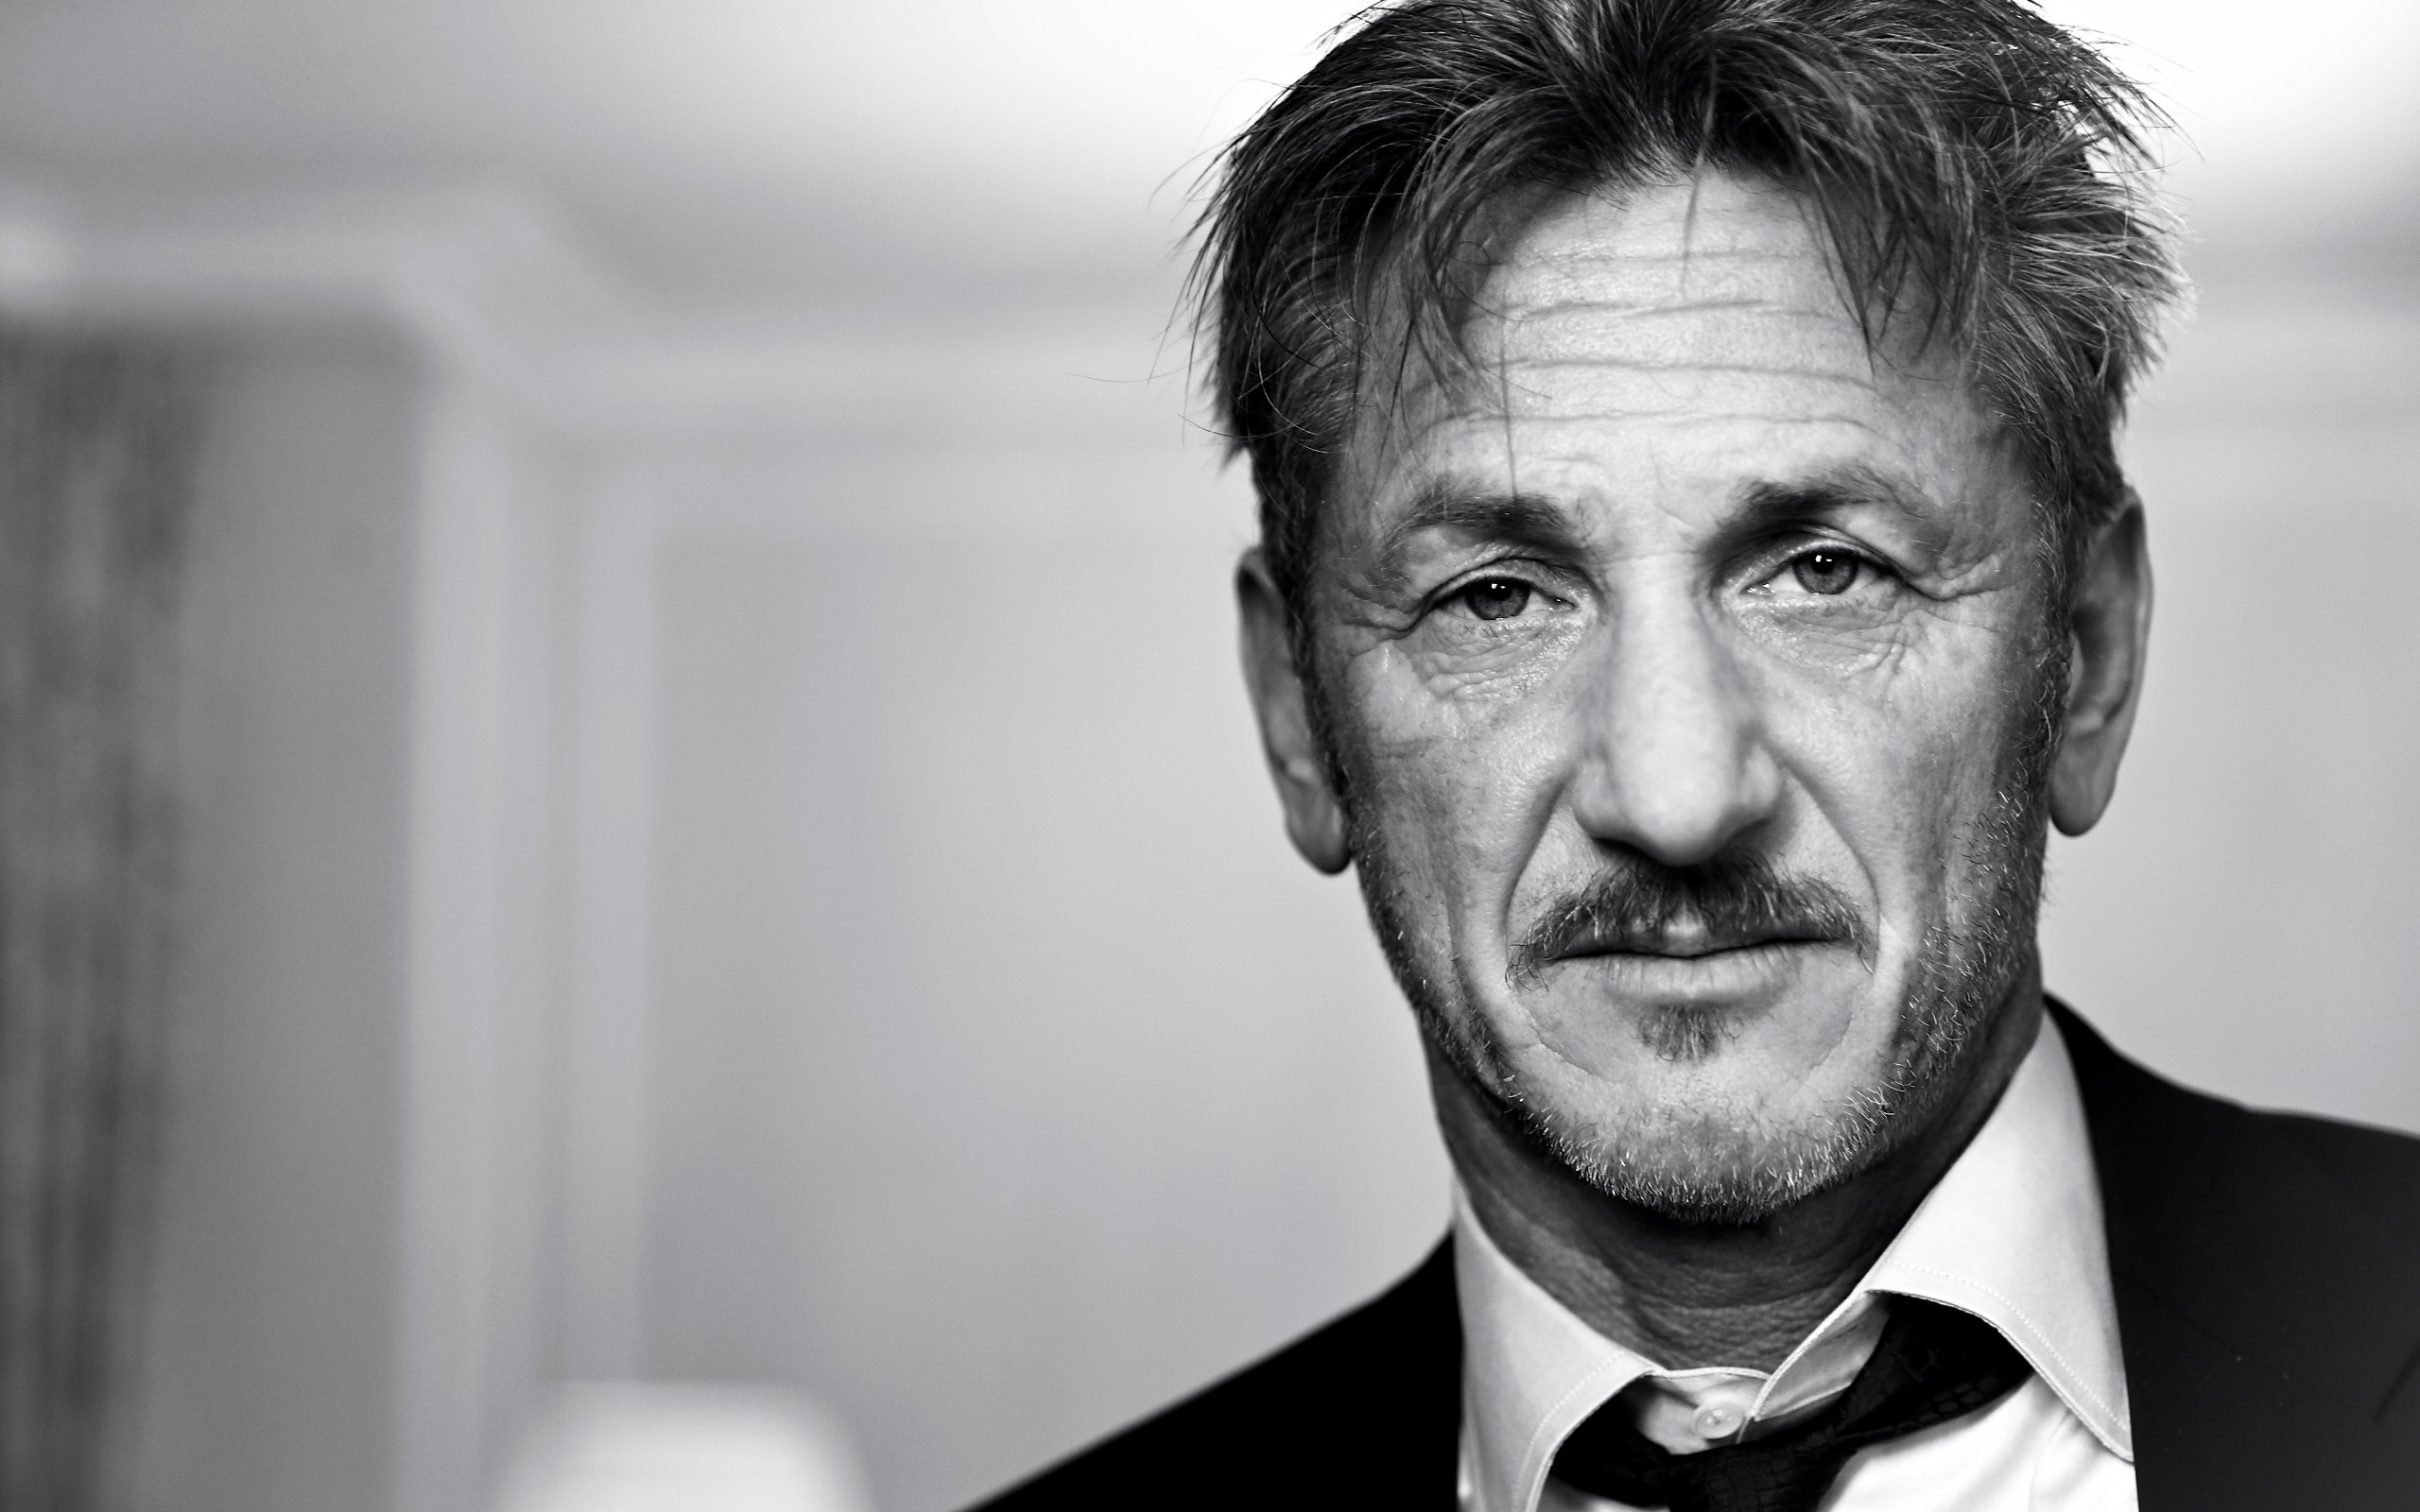 Sean Penn Portrait for 2560 x 1600 widescreen resolution